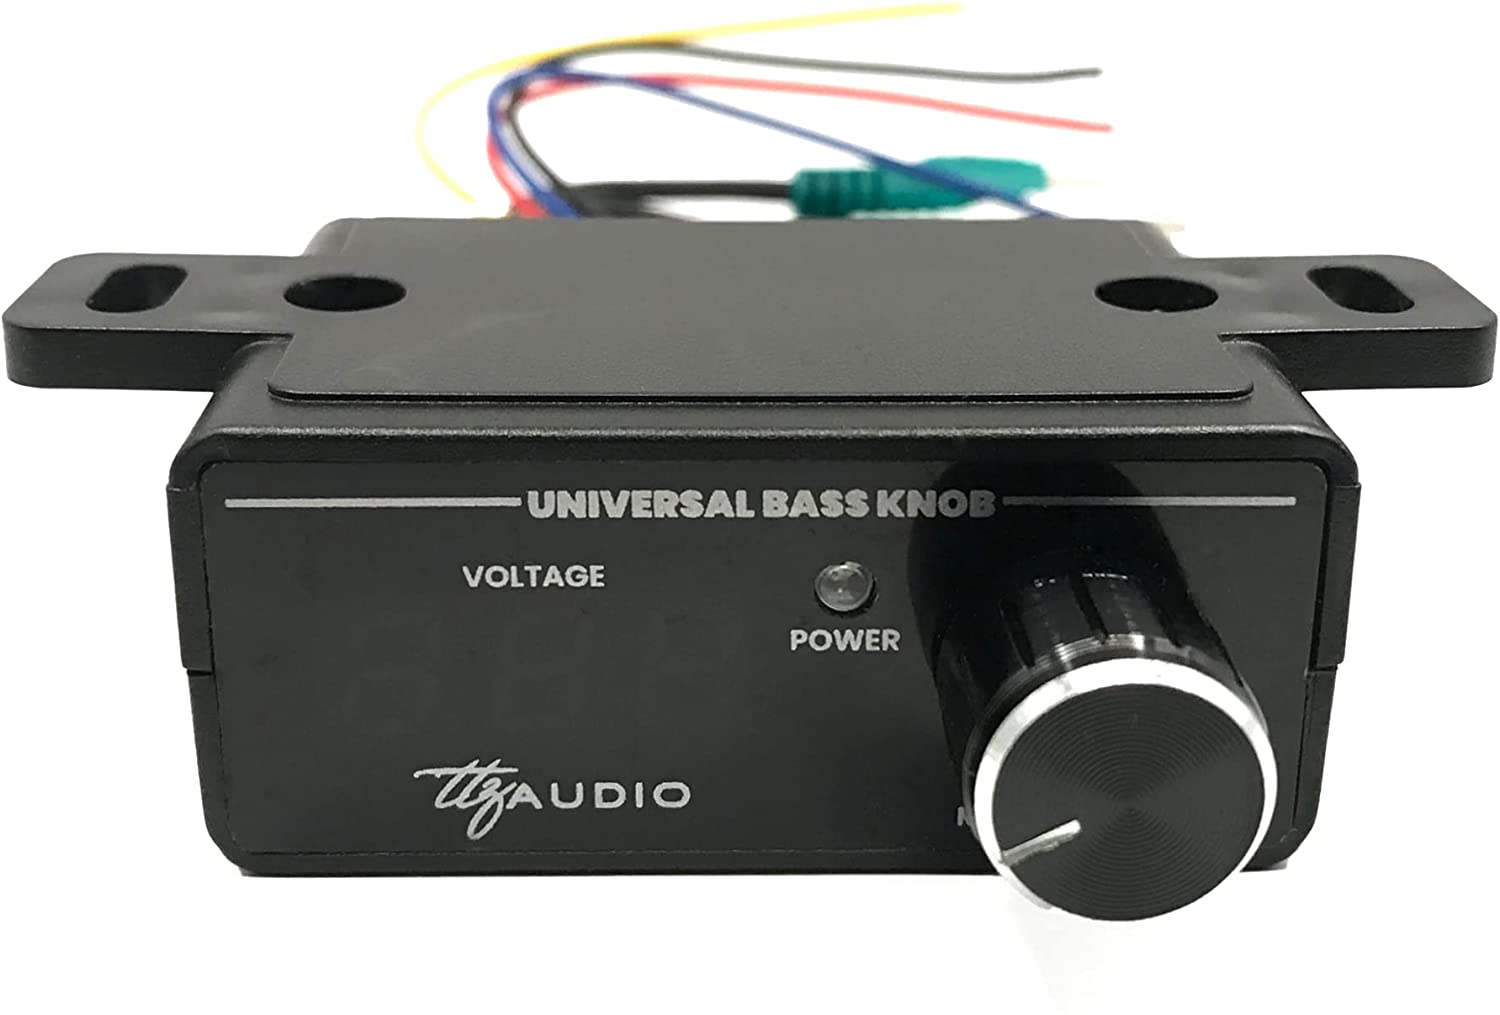 Universal Bass Knob